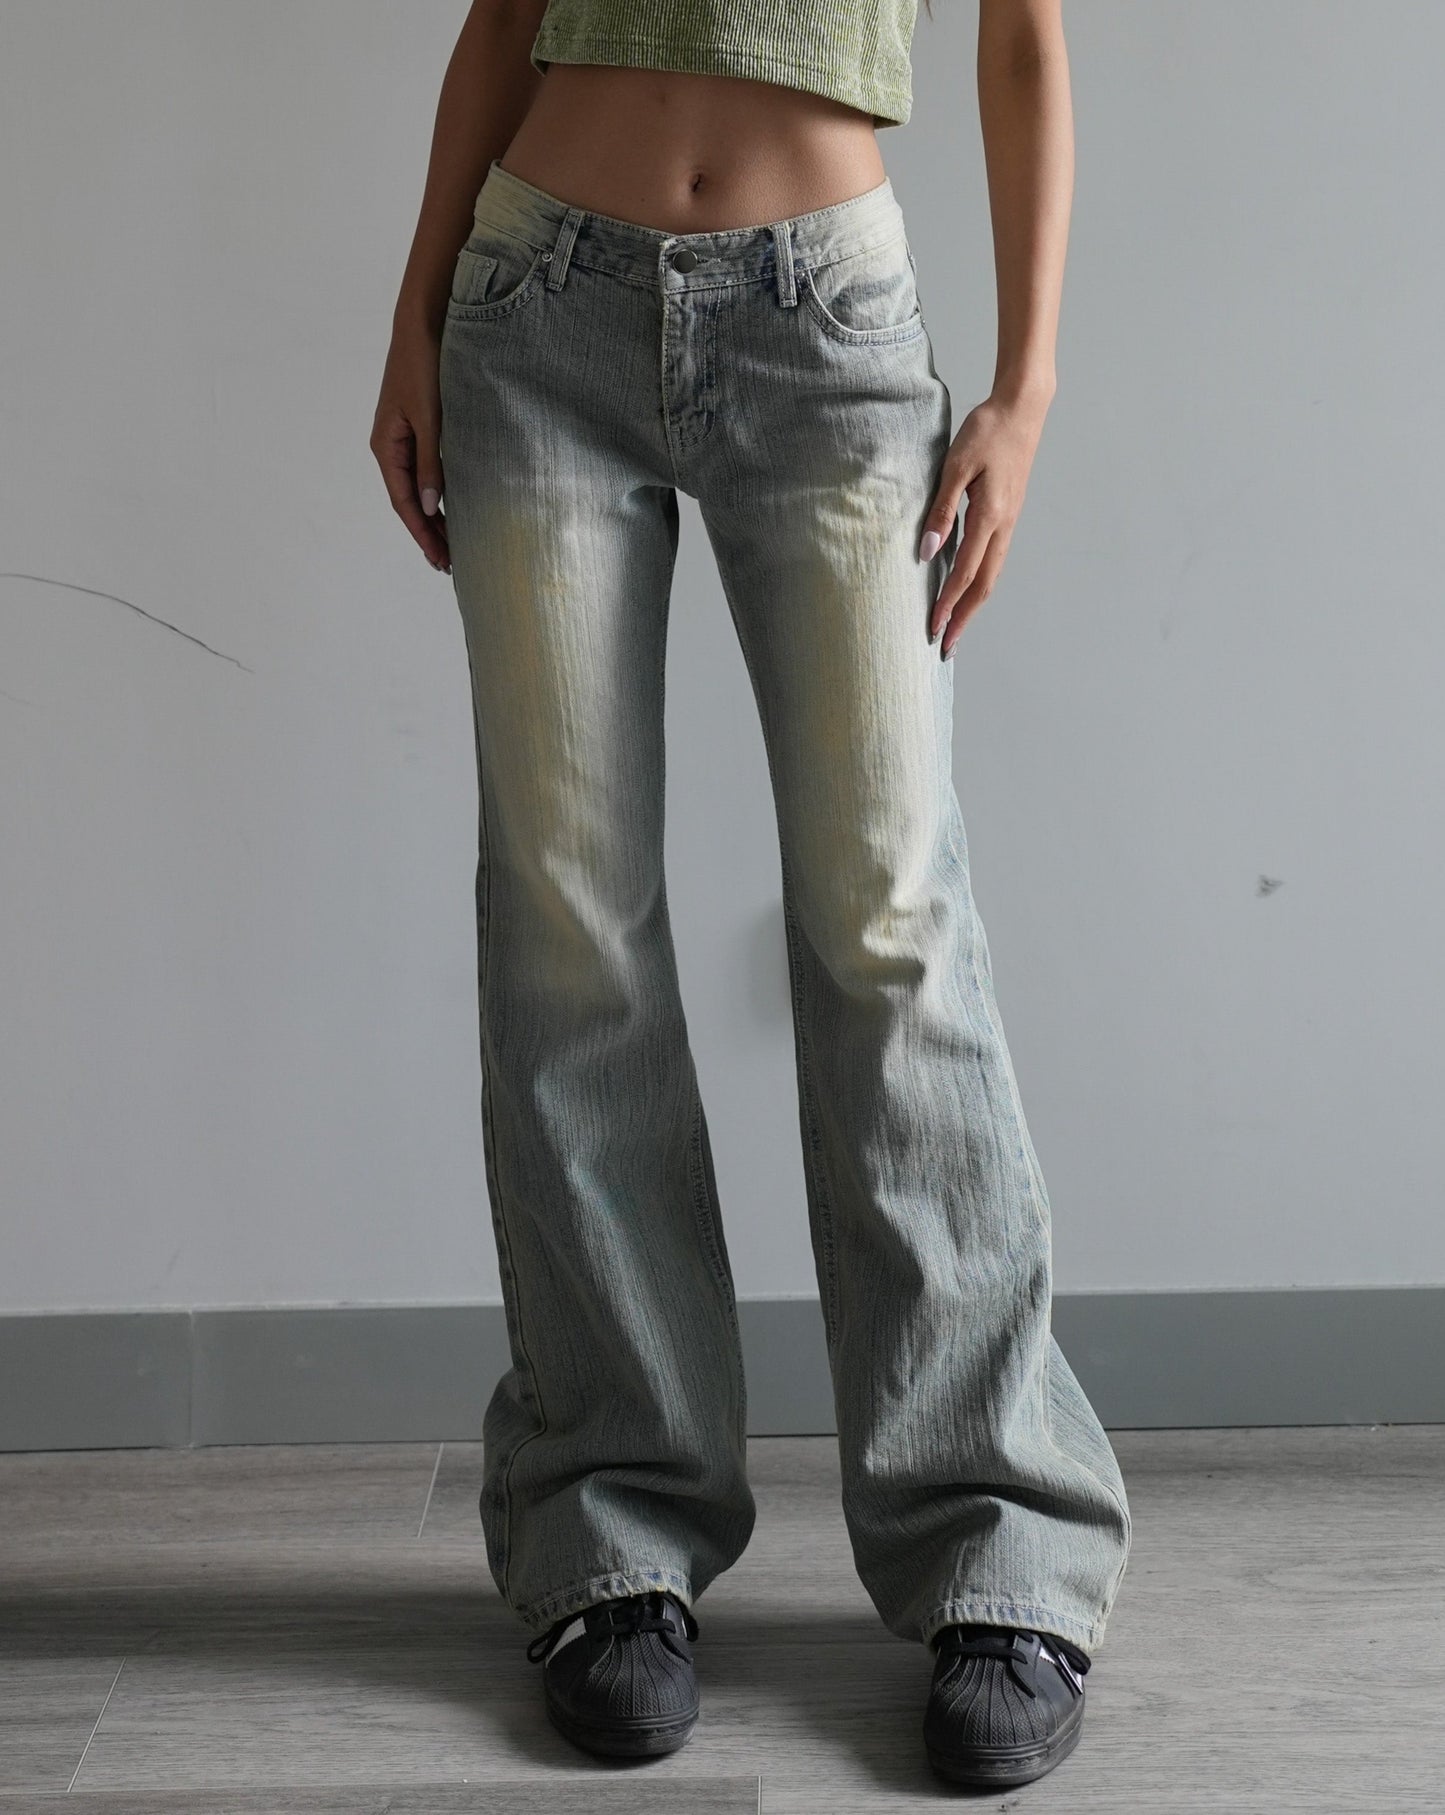 Buy Y2k Bell Bottom Jeans for Women Low Rise Skinny Flare Jeans